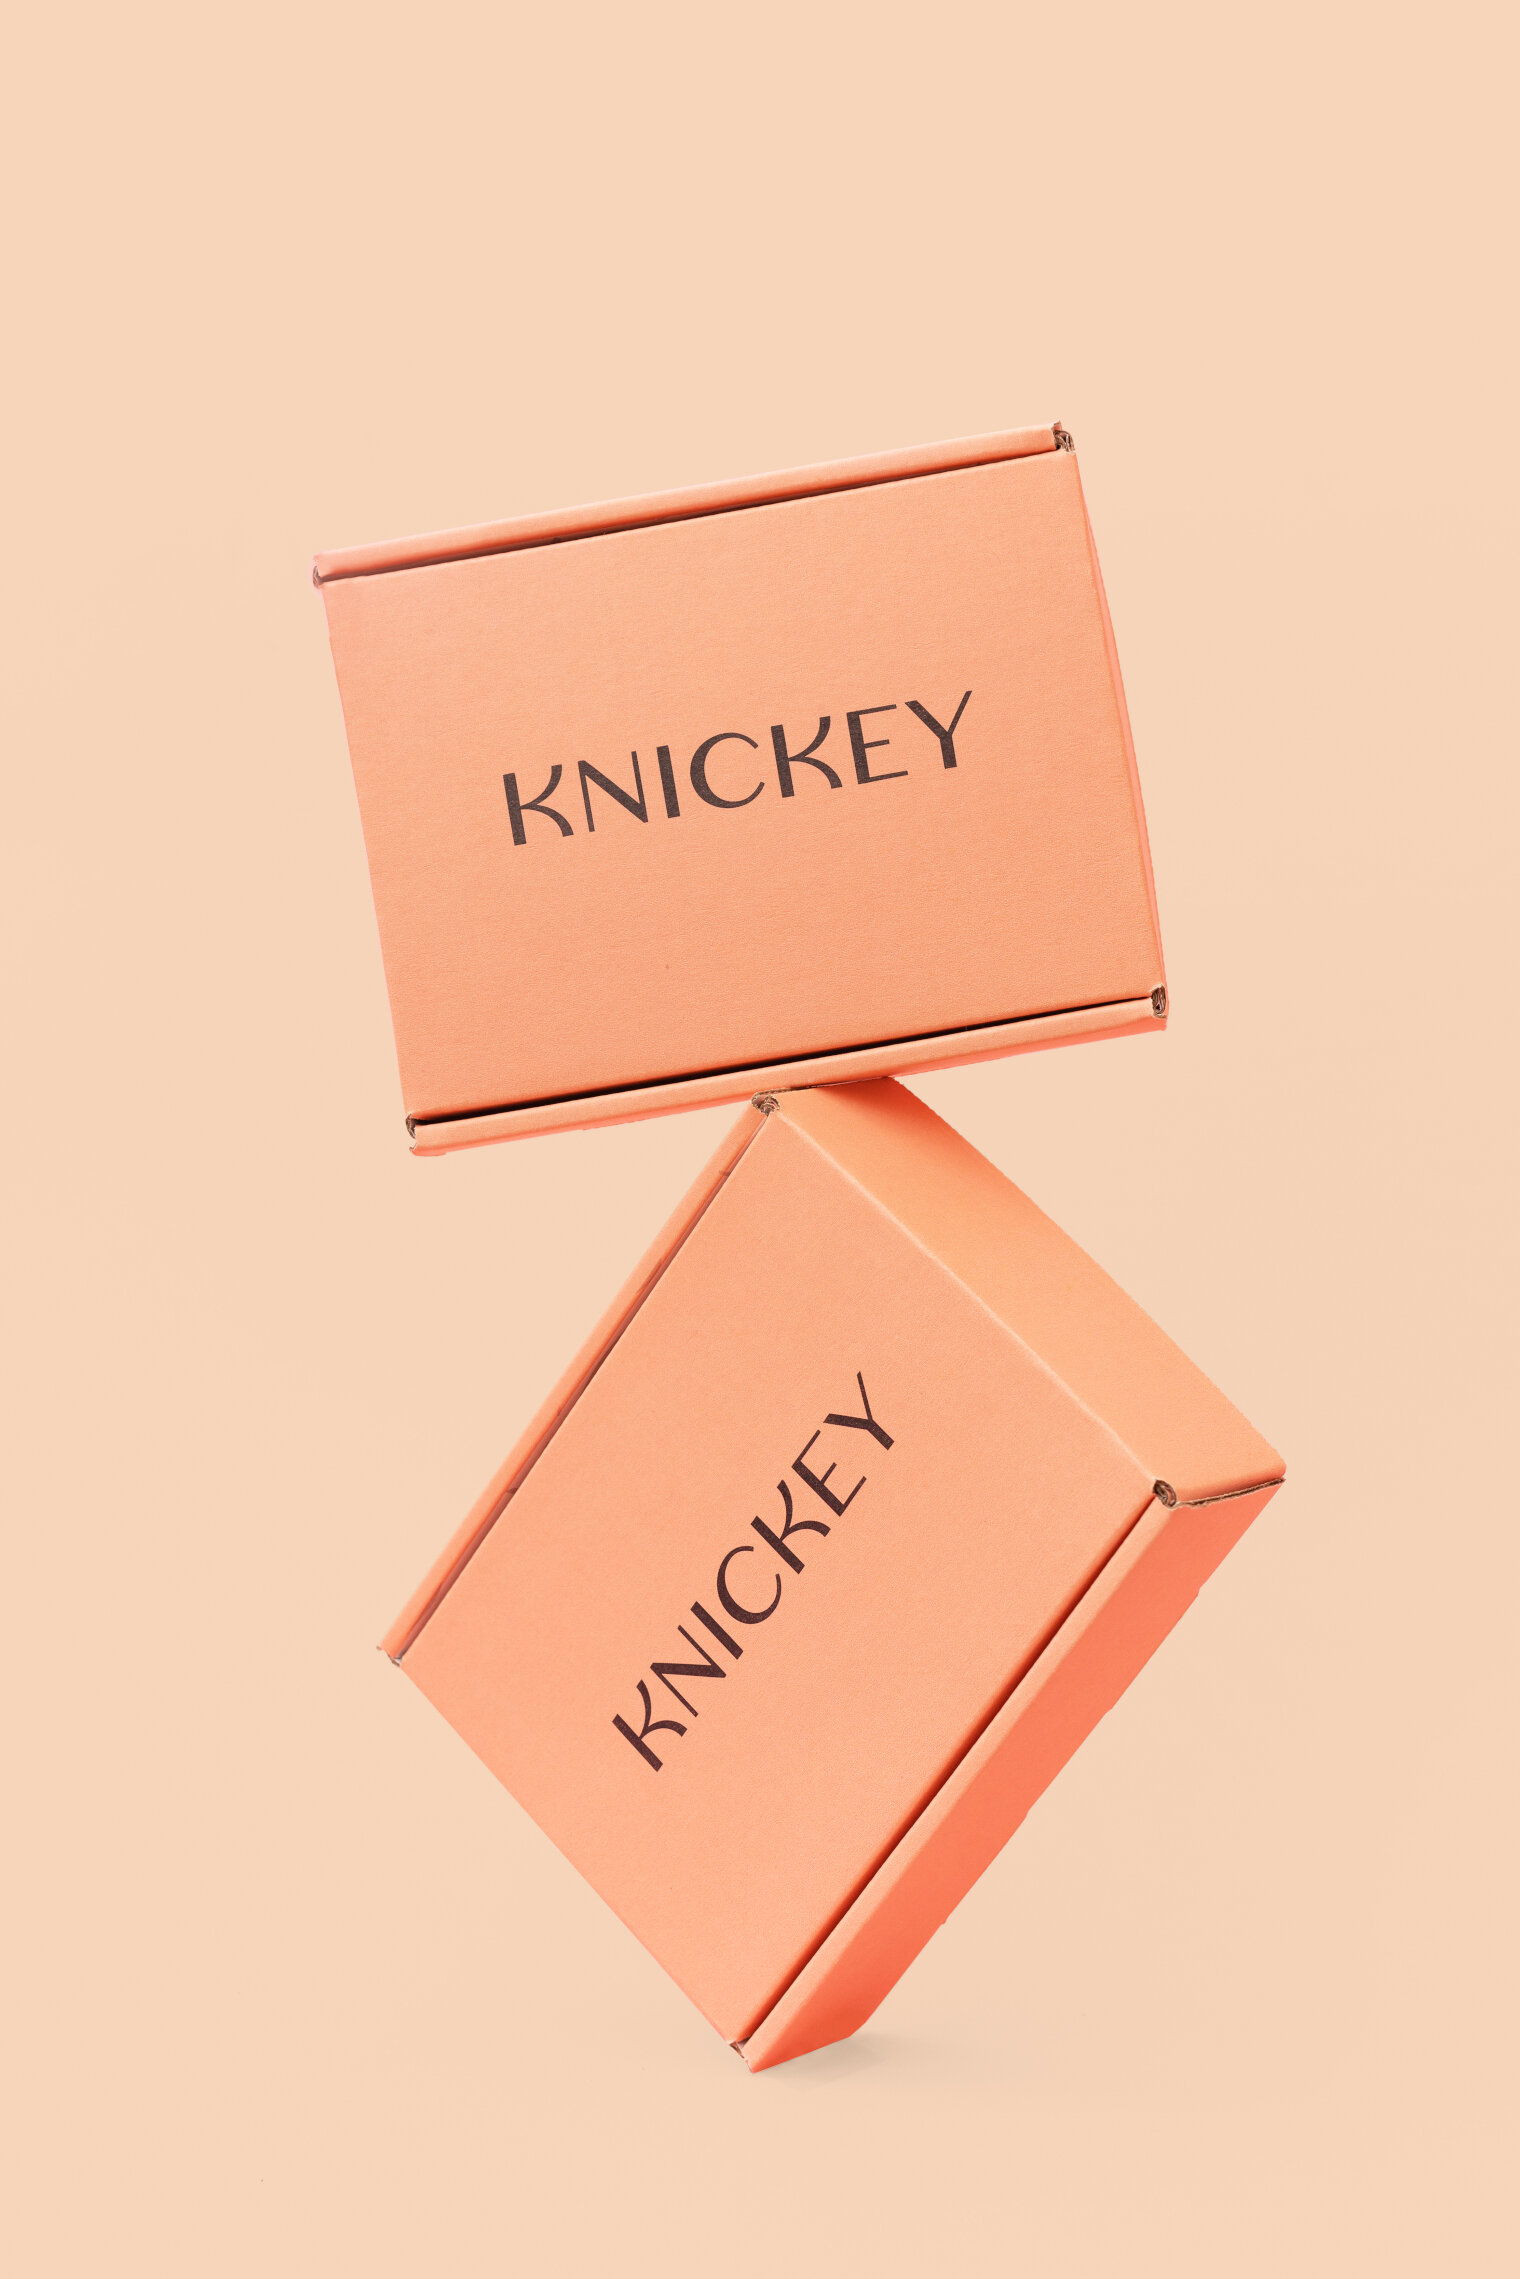 Knickey underwear: behind the scene — SustainYourStyle